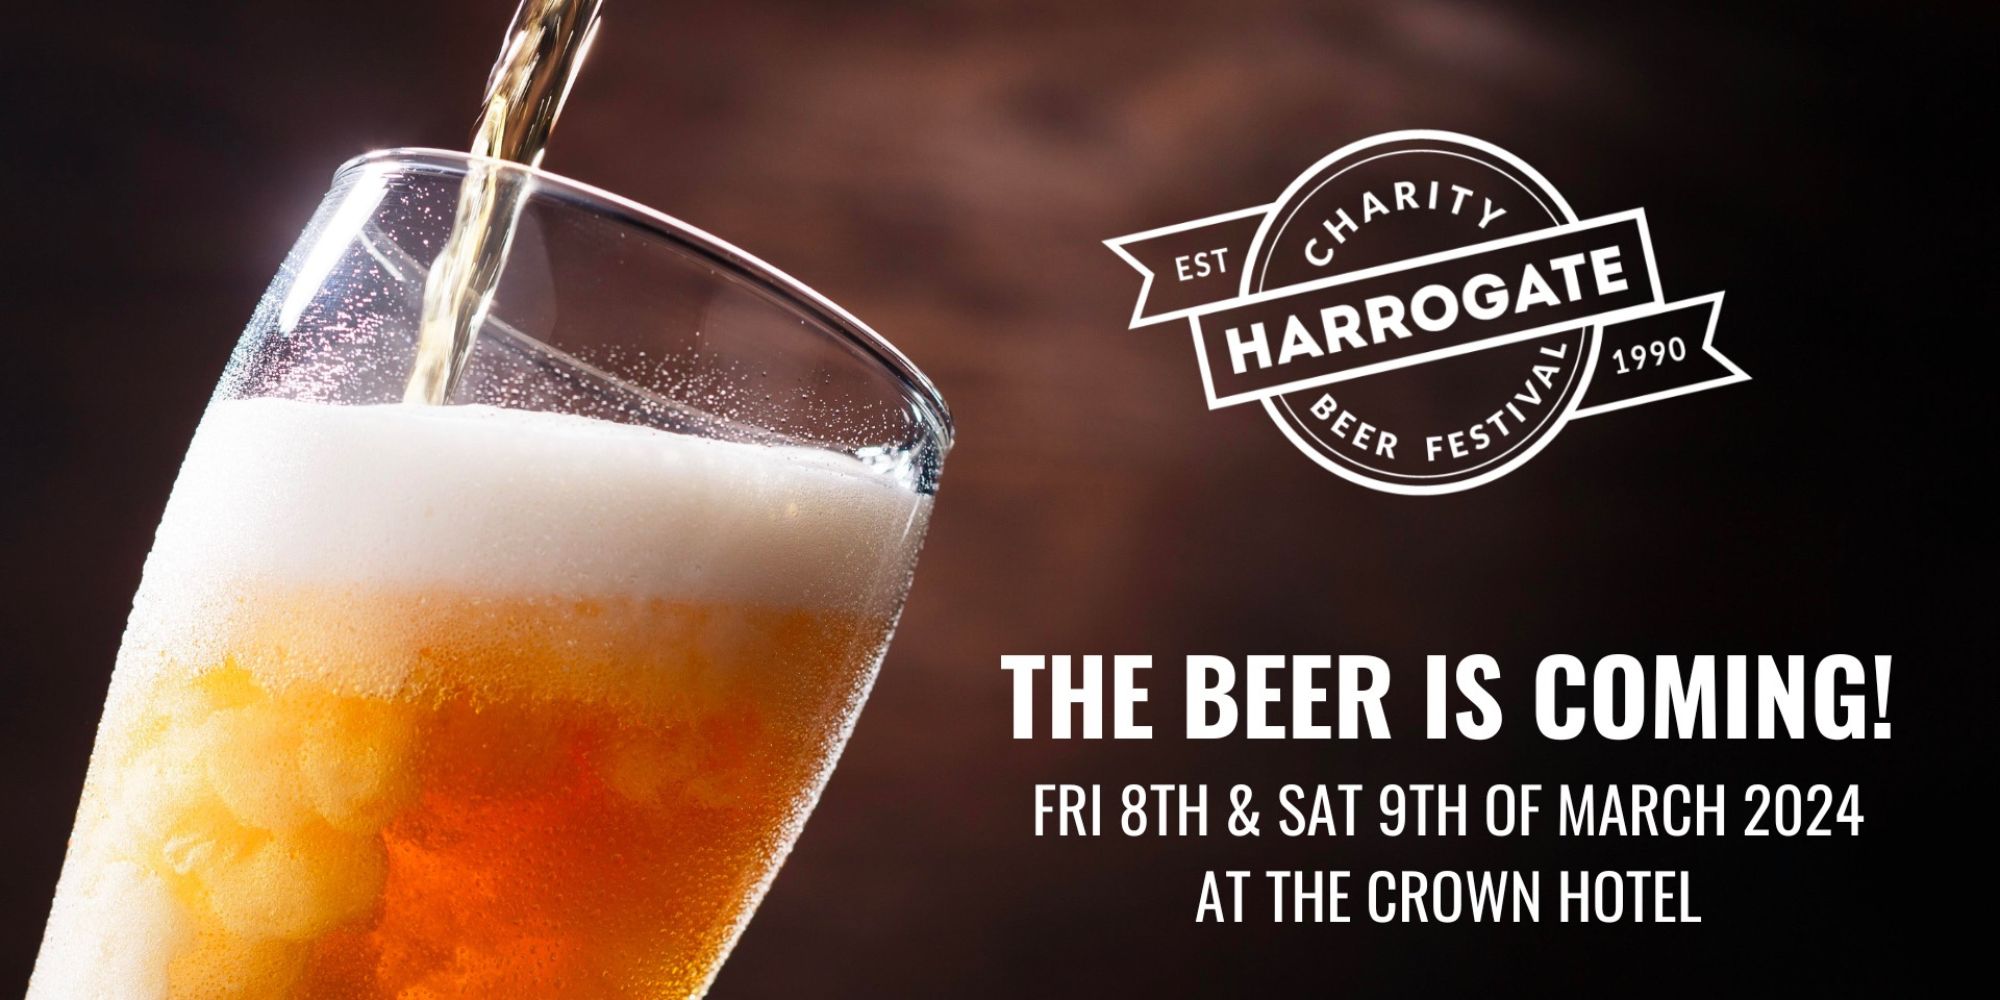 Harrogate International Festivals is a chosen charity for the Harrogate Round Table Beer Festival 2024